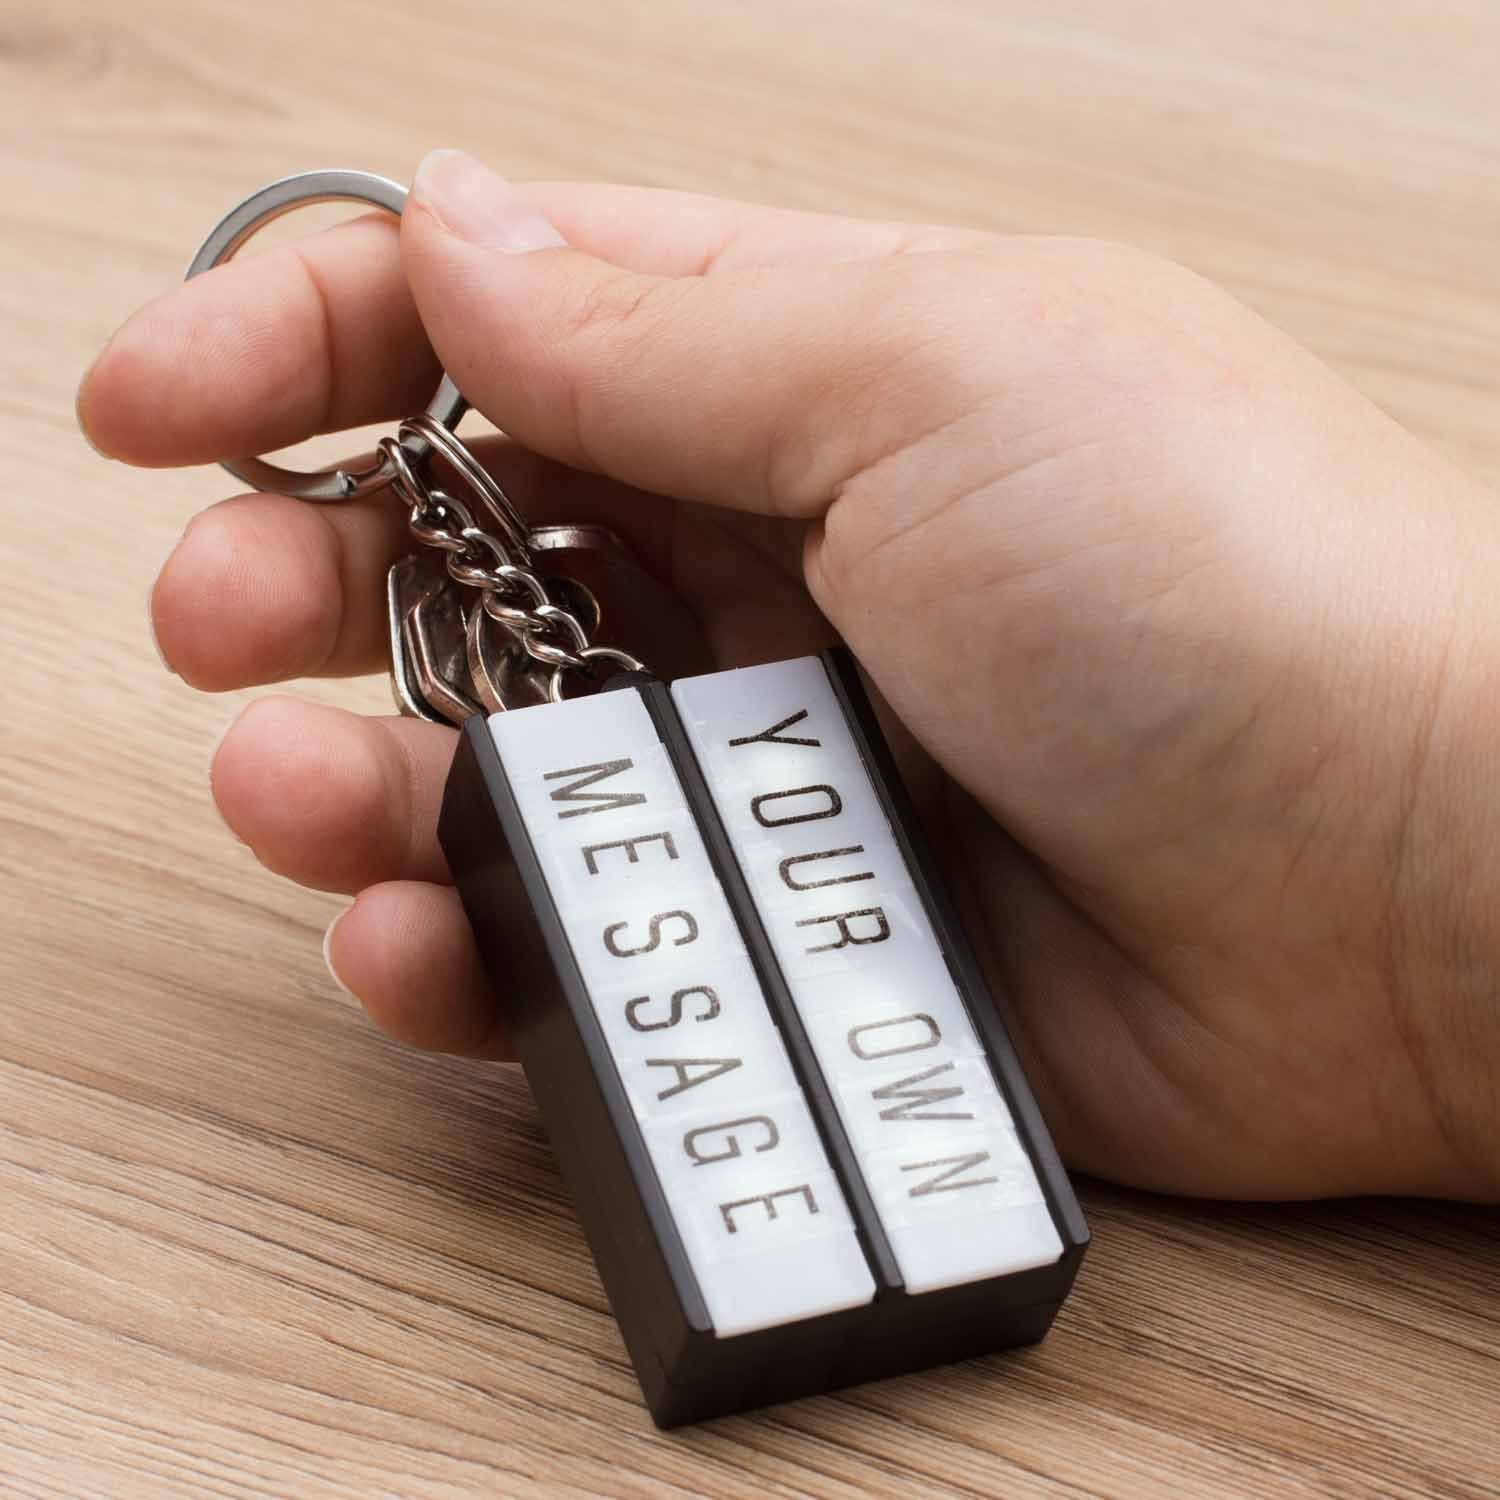 - inkl. Lightbox), Retro Sticker Schlüsselanhänger Schlüsselanhänger Up Thumbs (Mini LED Leuchtkasten